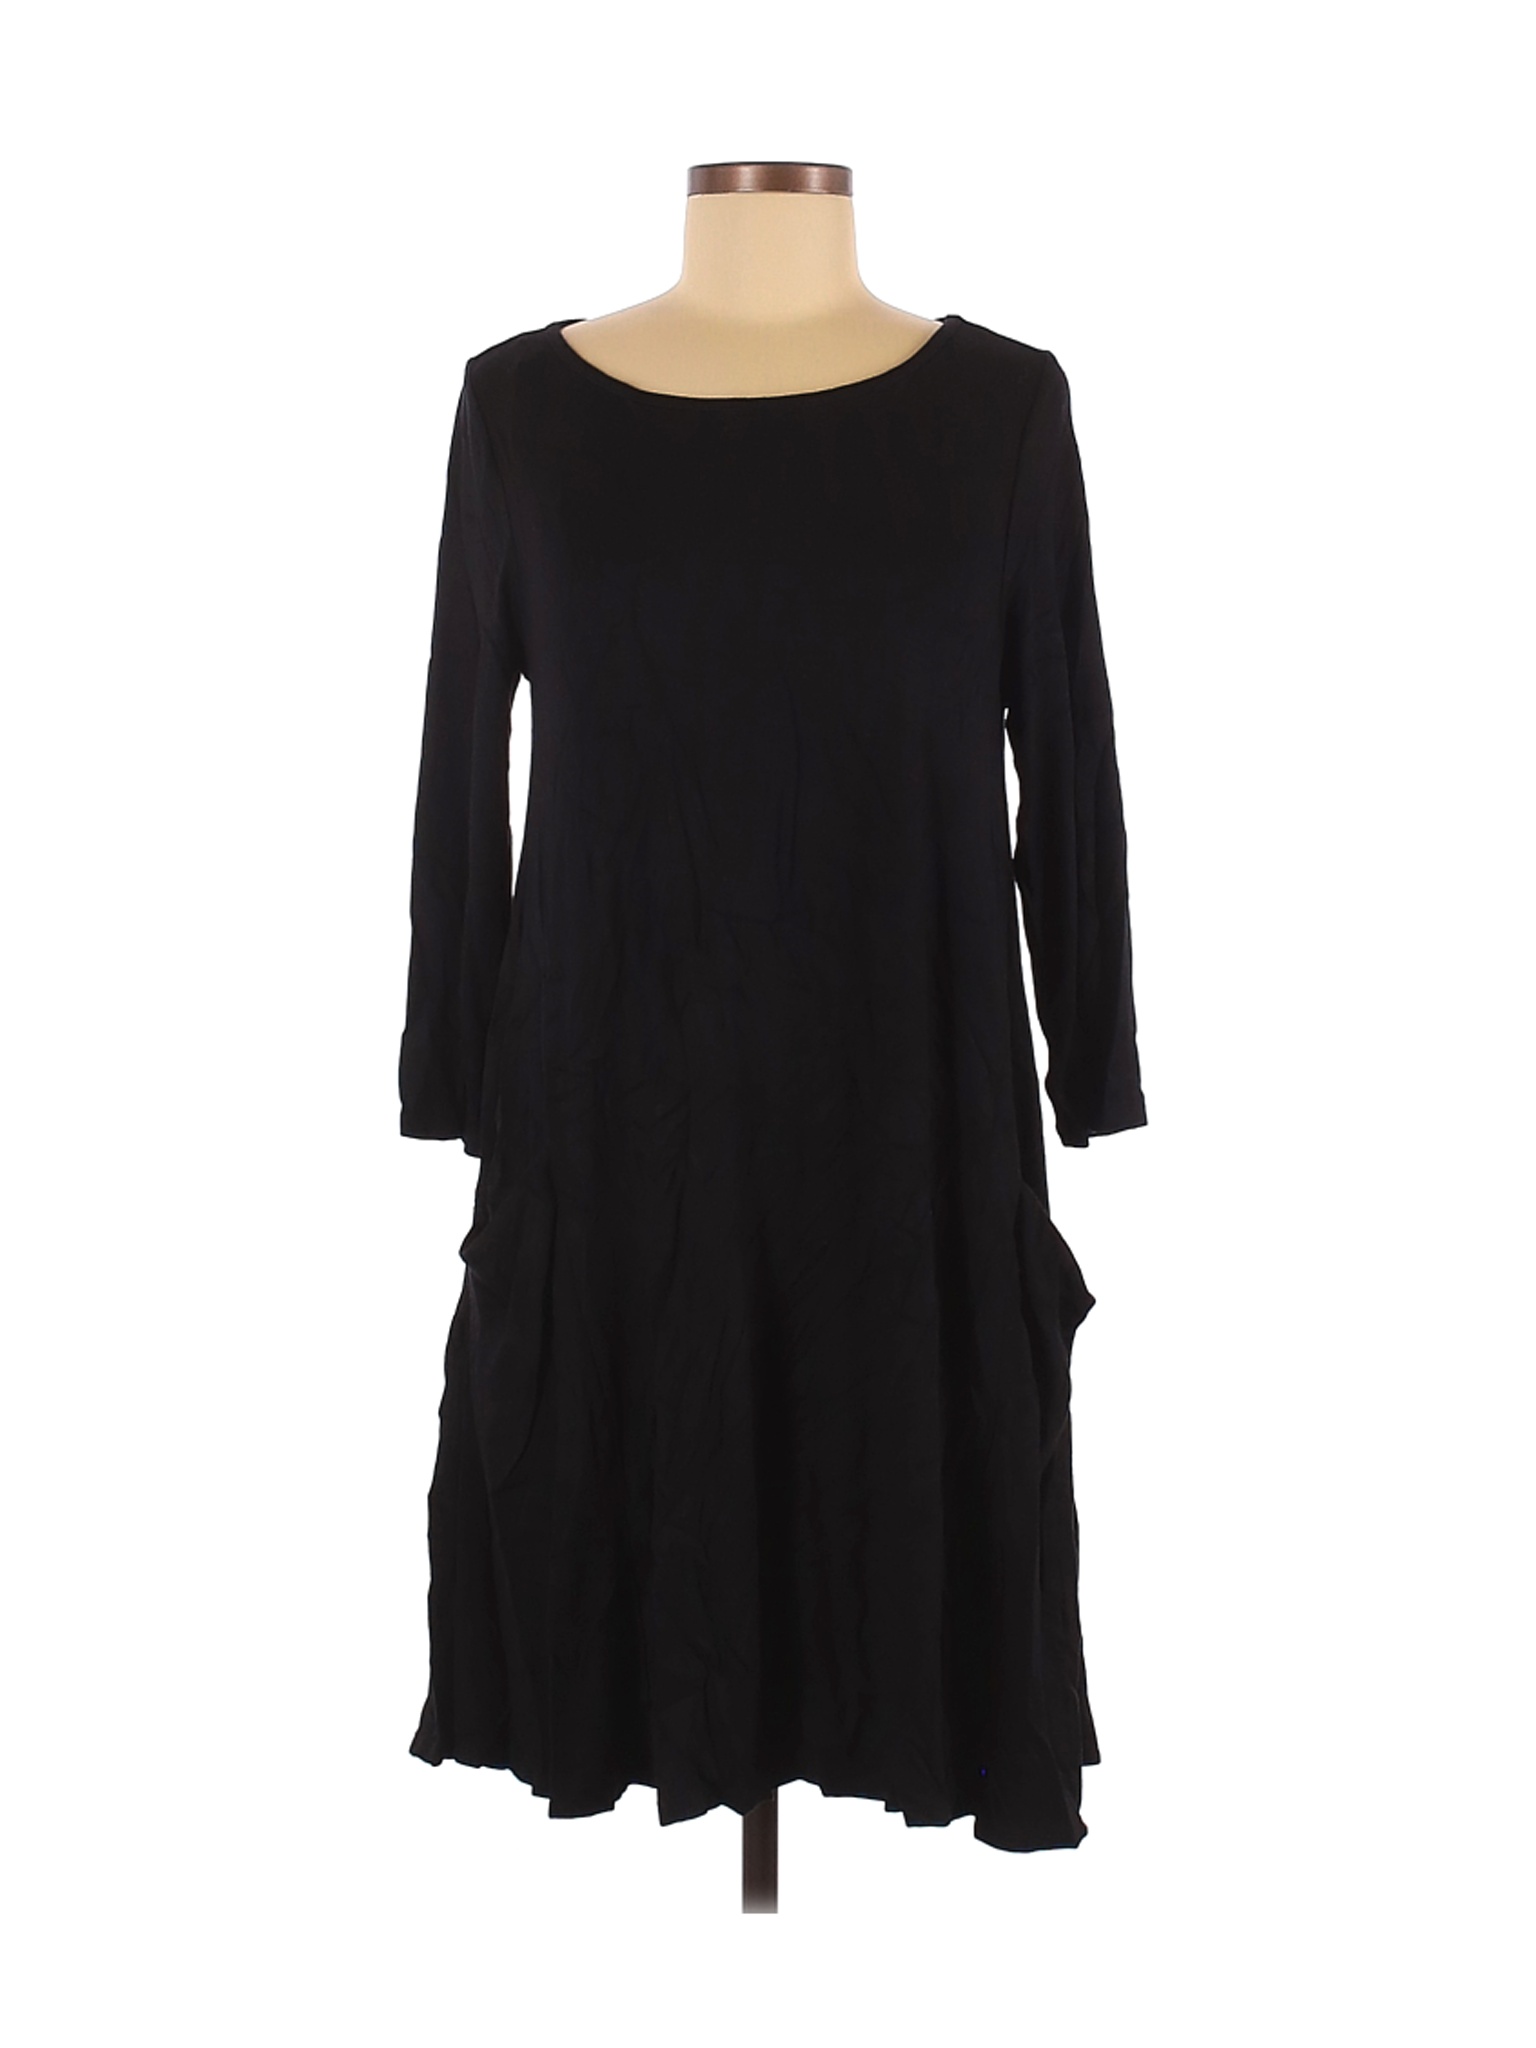 Adrienne Vittadini Women Black Casual Dress M | eBay